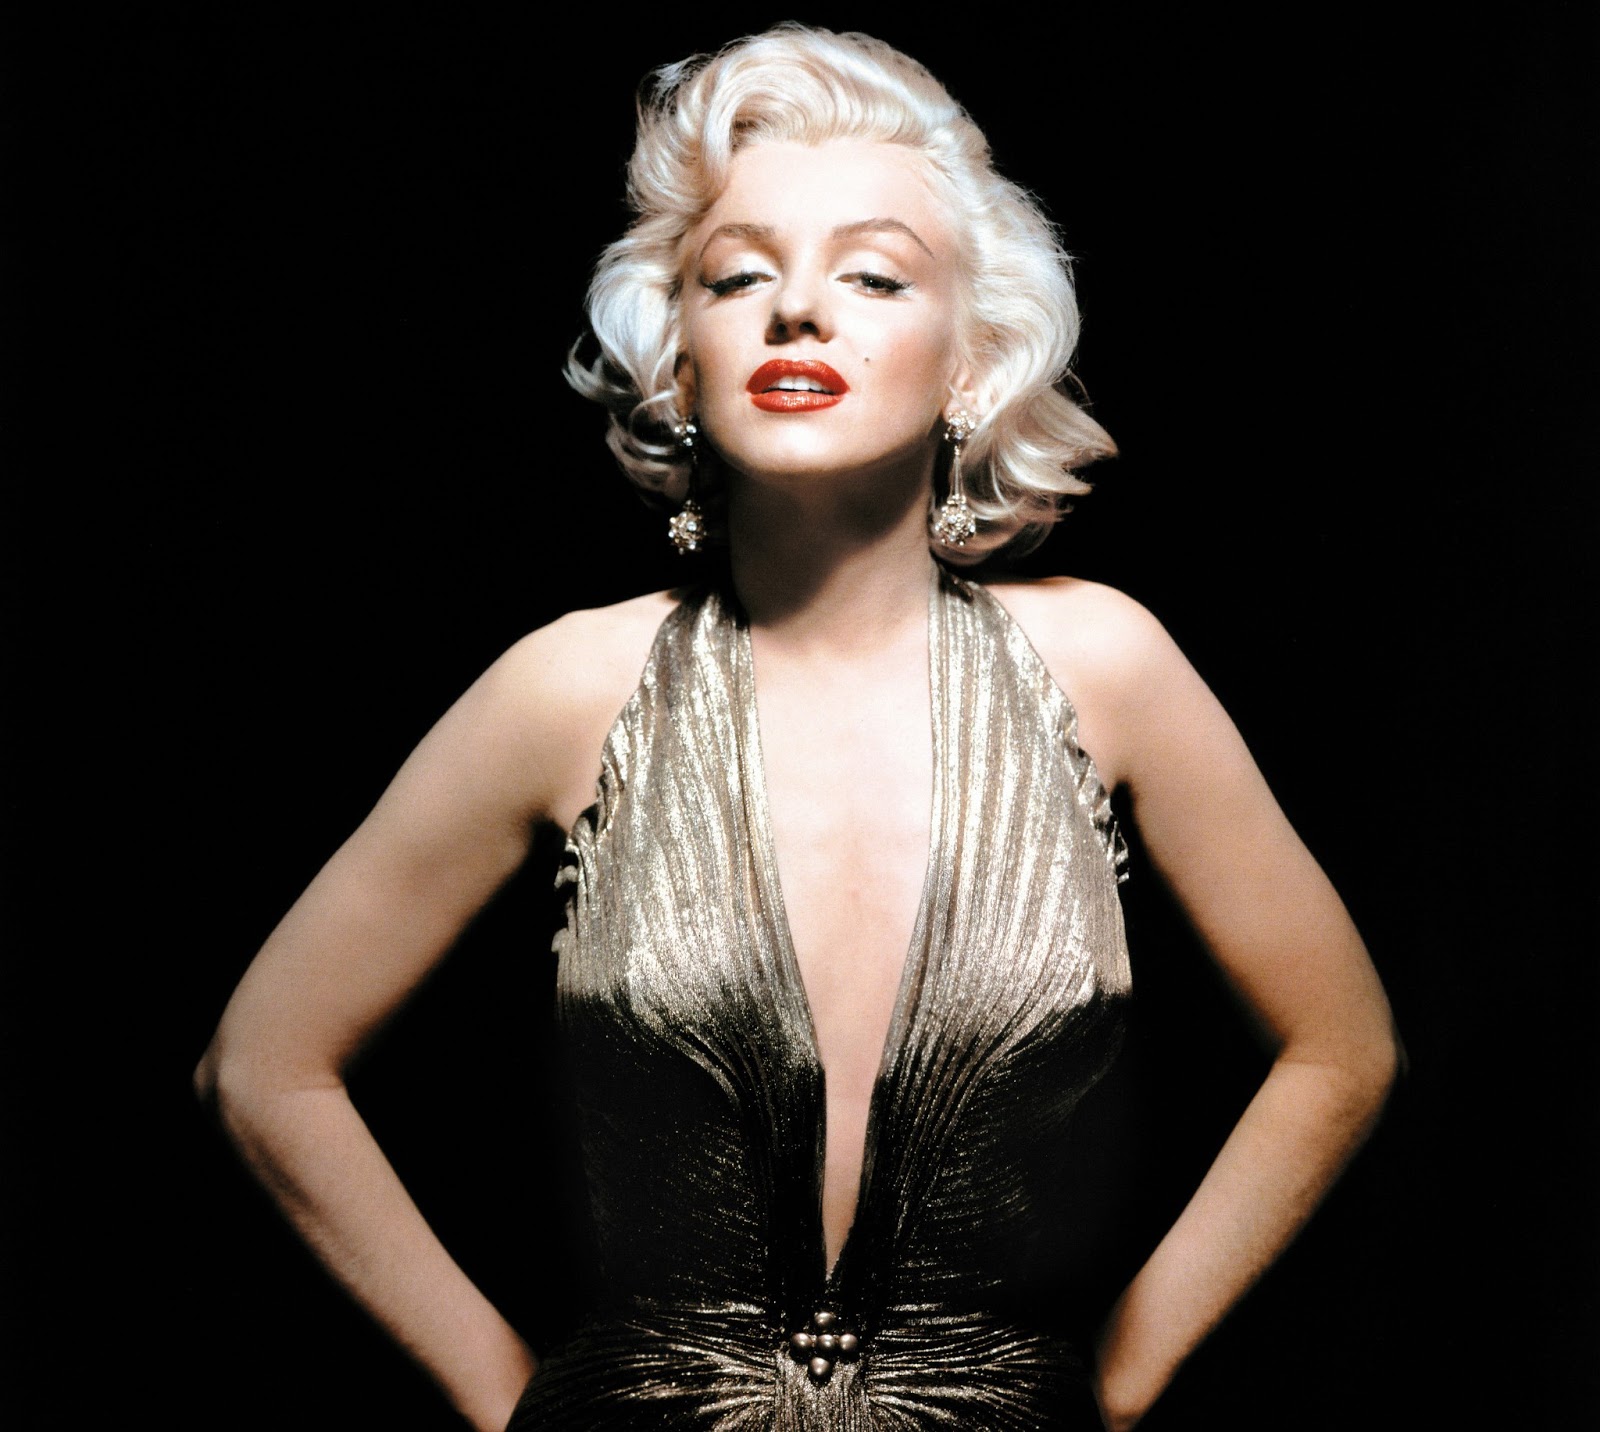 Shaman-goddessâ€¦ Marilyn Monroe on her 30th birthday.